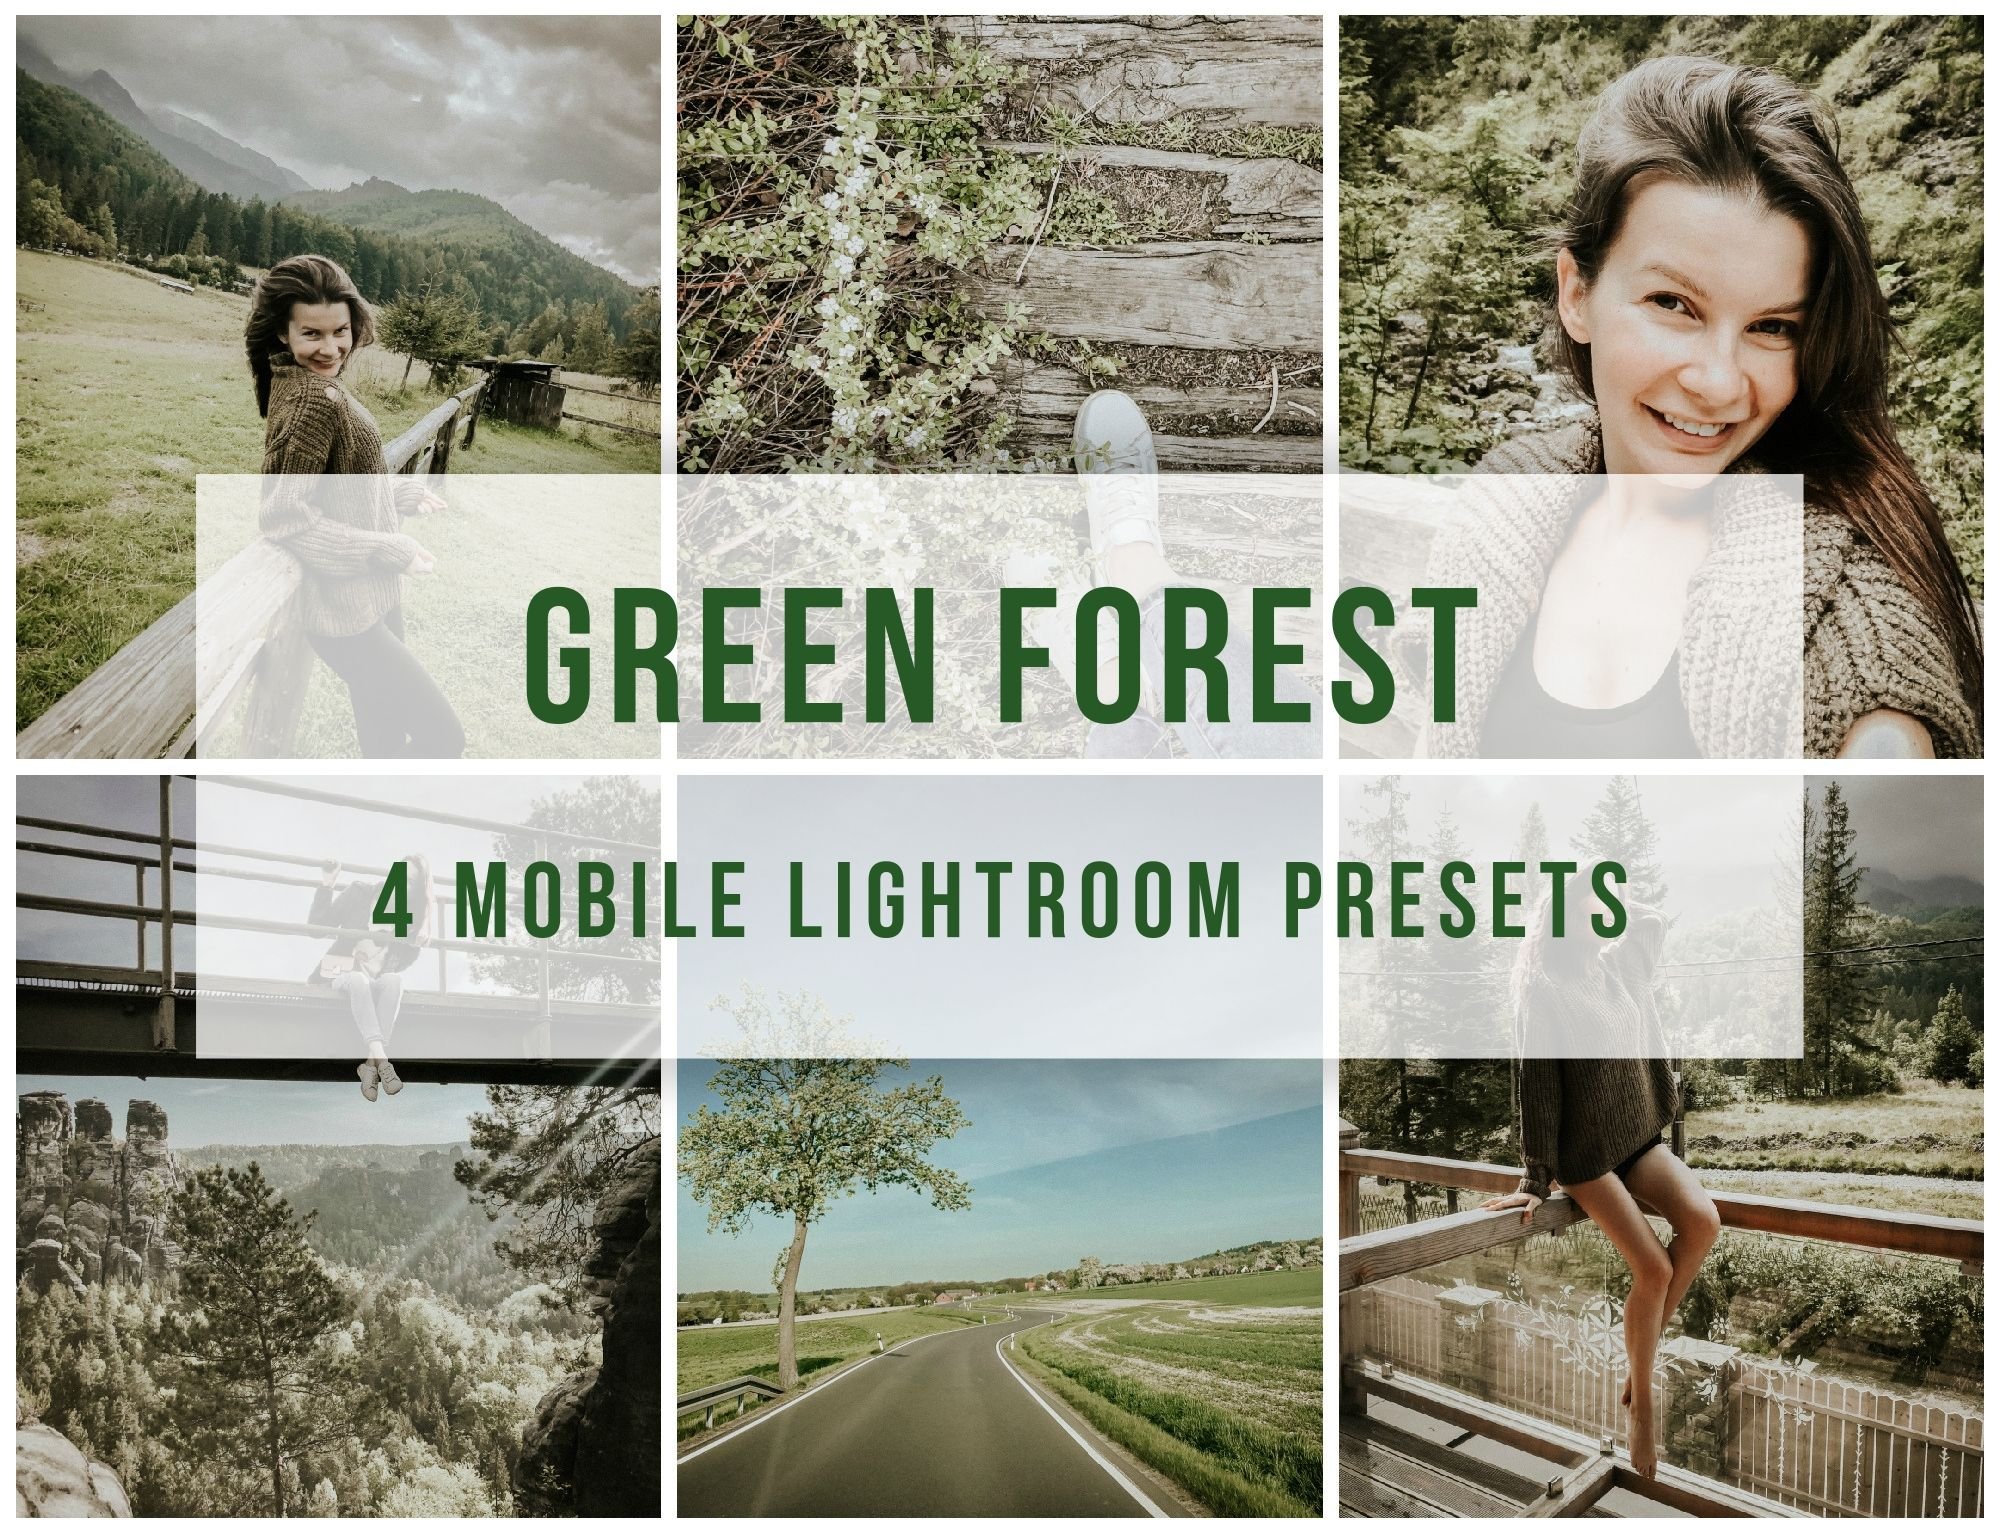 Lightroom Mobile Preset Green Forestcover image.